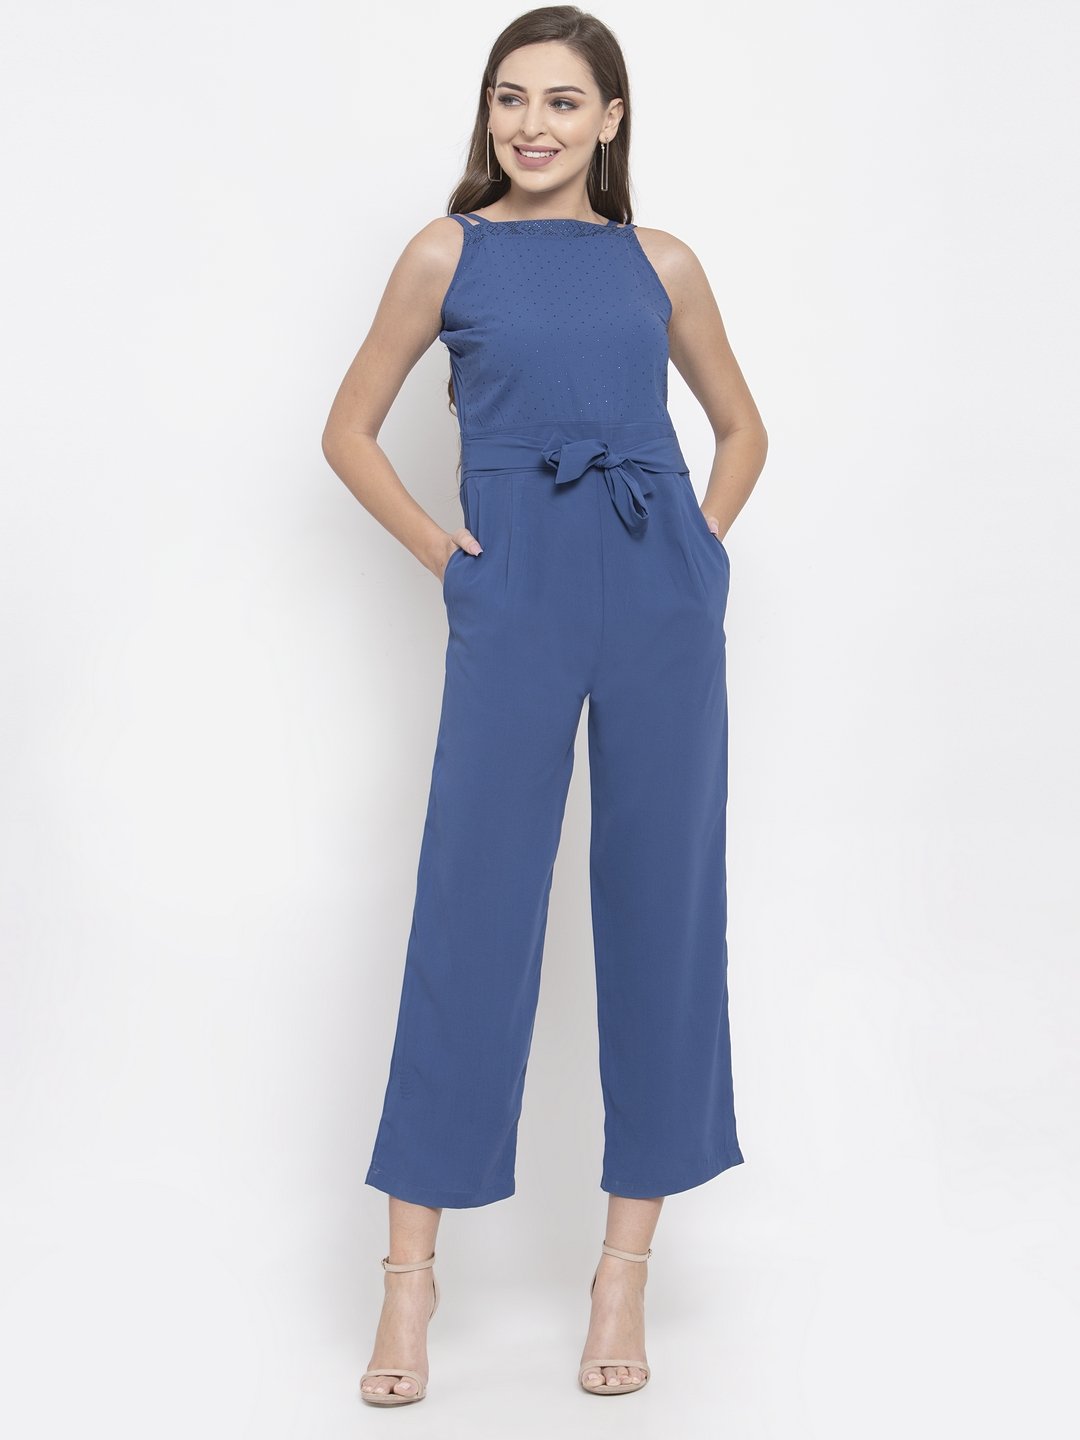 Women's Blue Solid Embellished Jumpsuit - Jompers